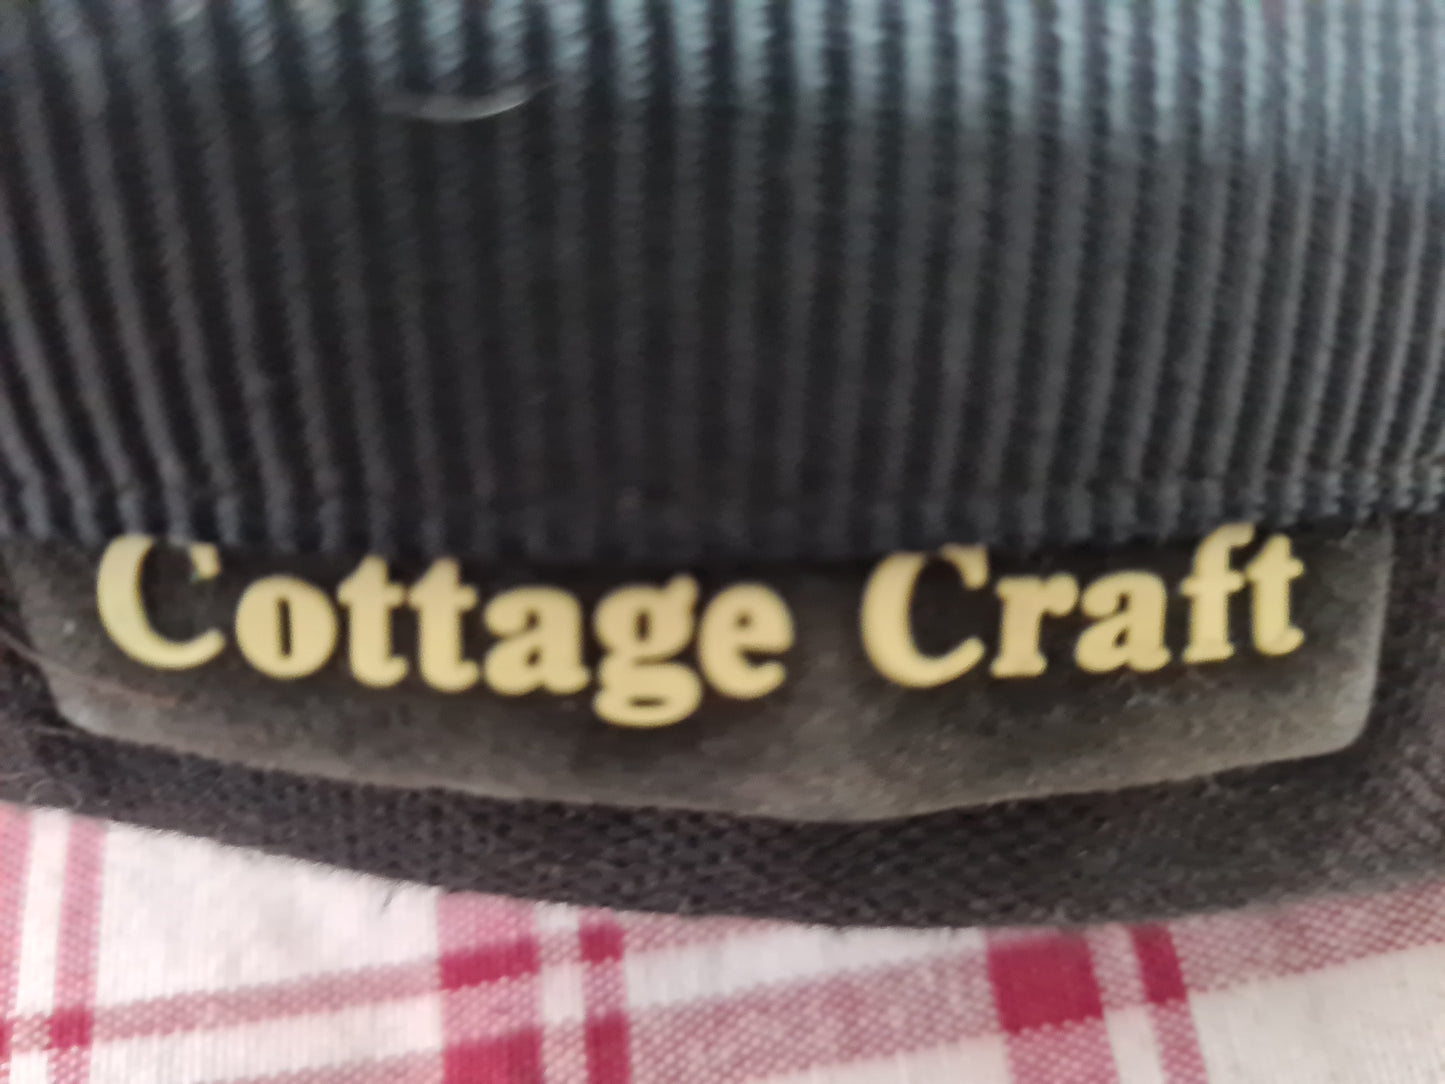 Black Cottage craft girth 47" FREE POSTAGE 🟢